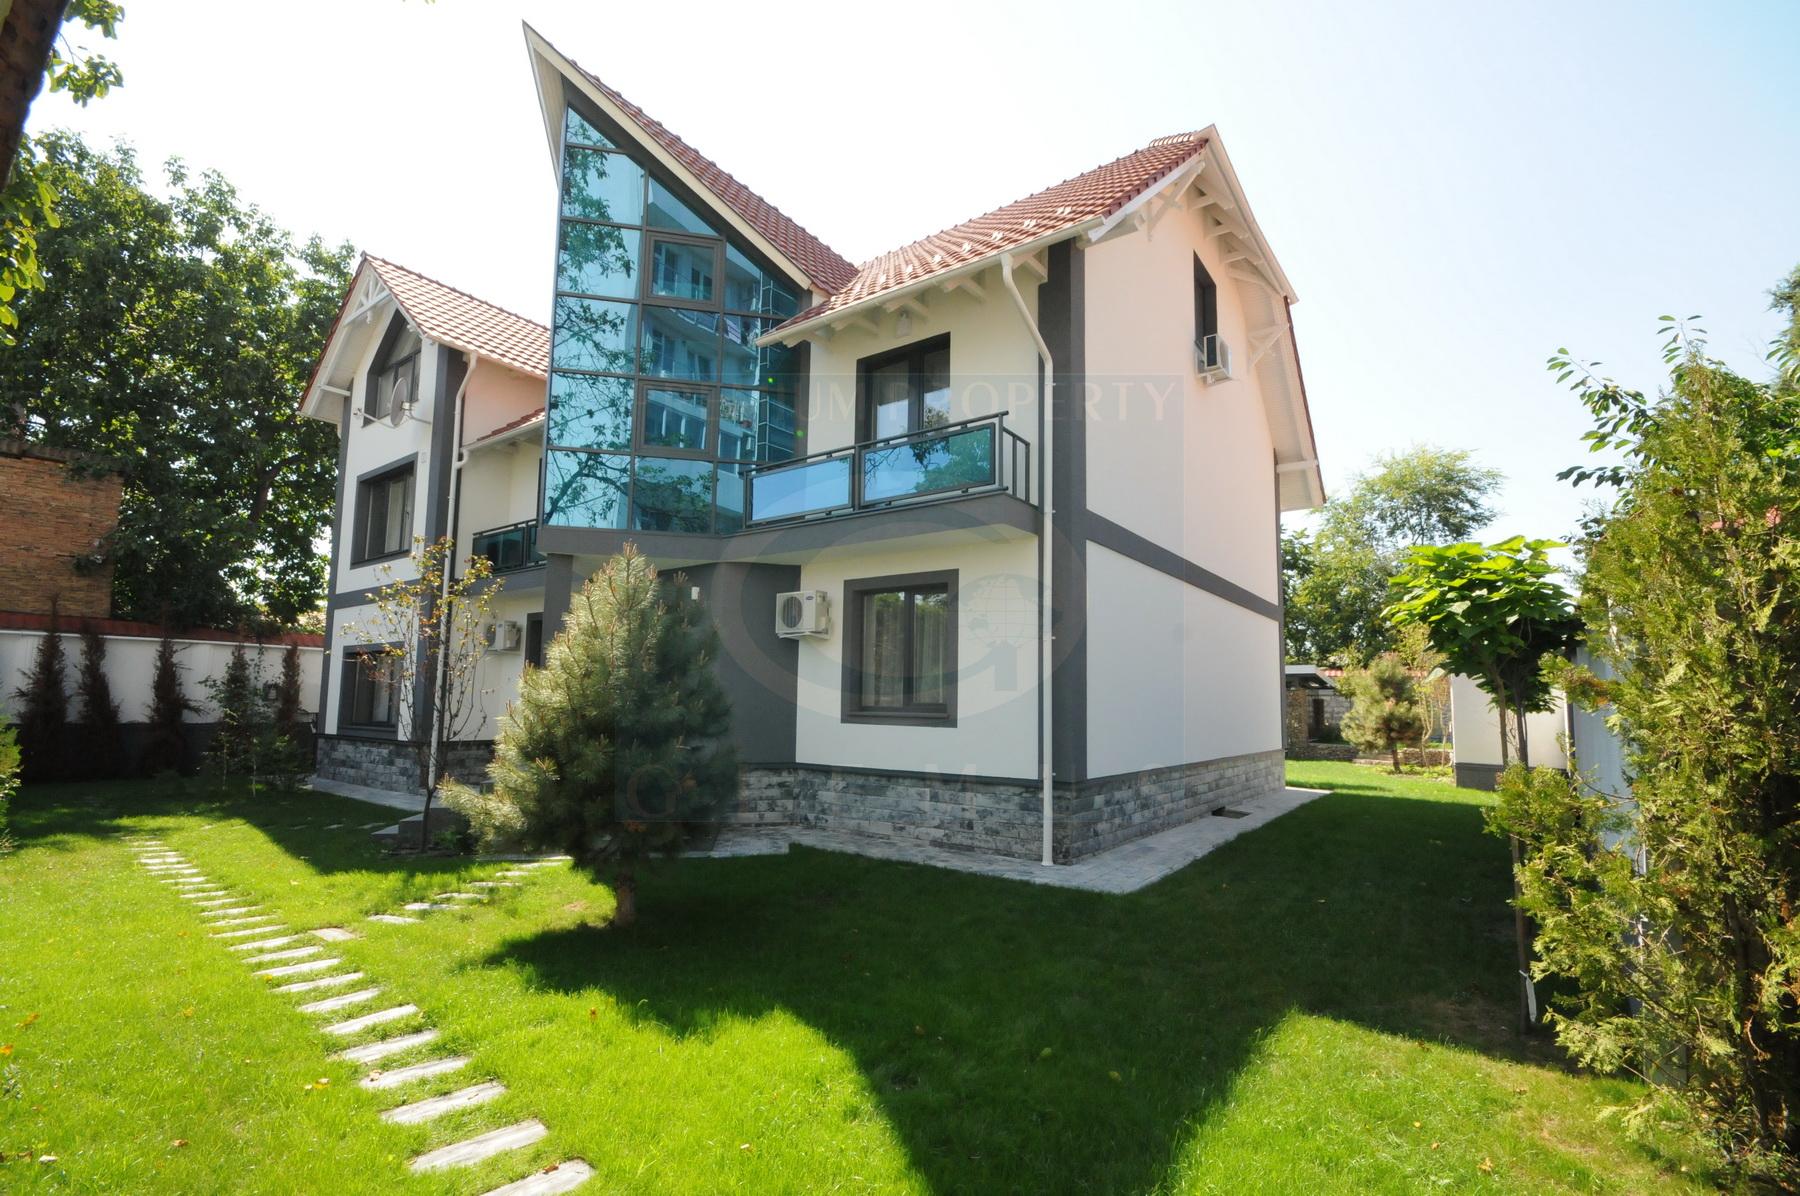 Rent Long Term Apartment In Chisinau